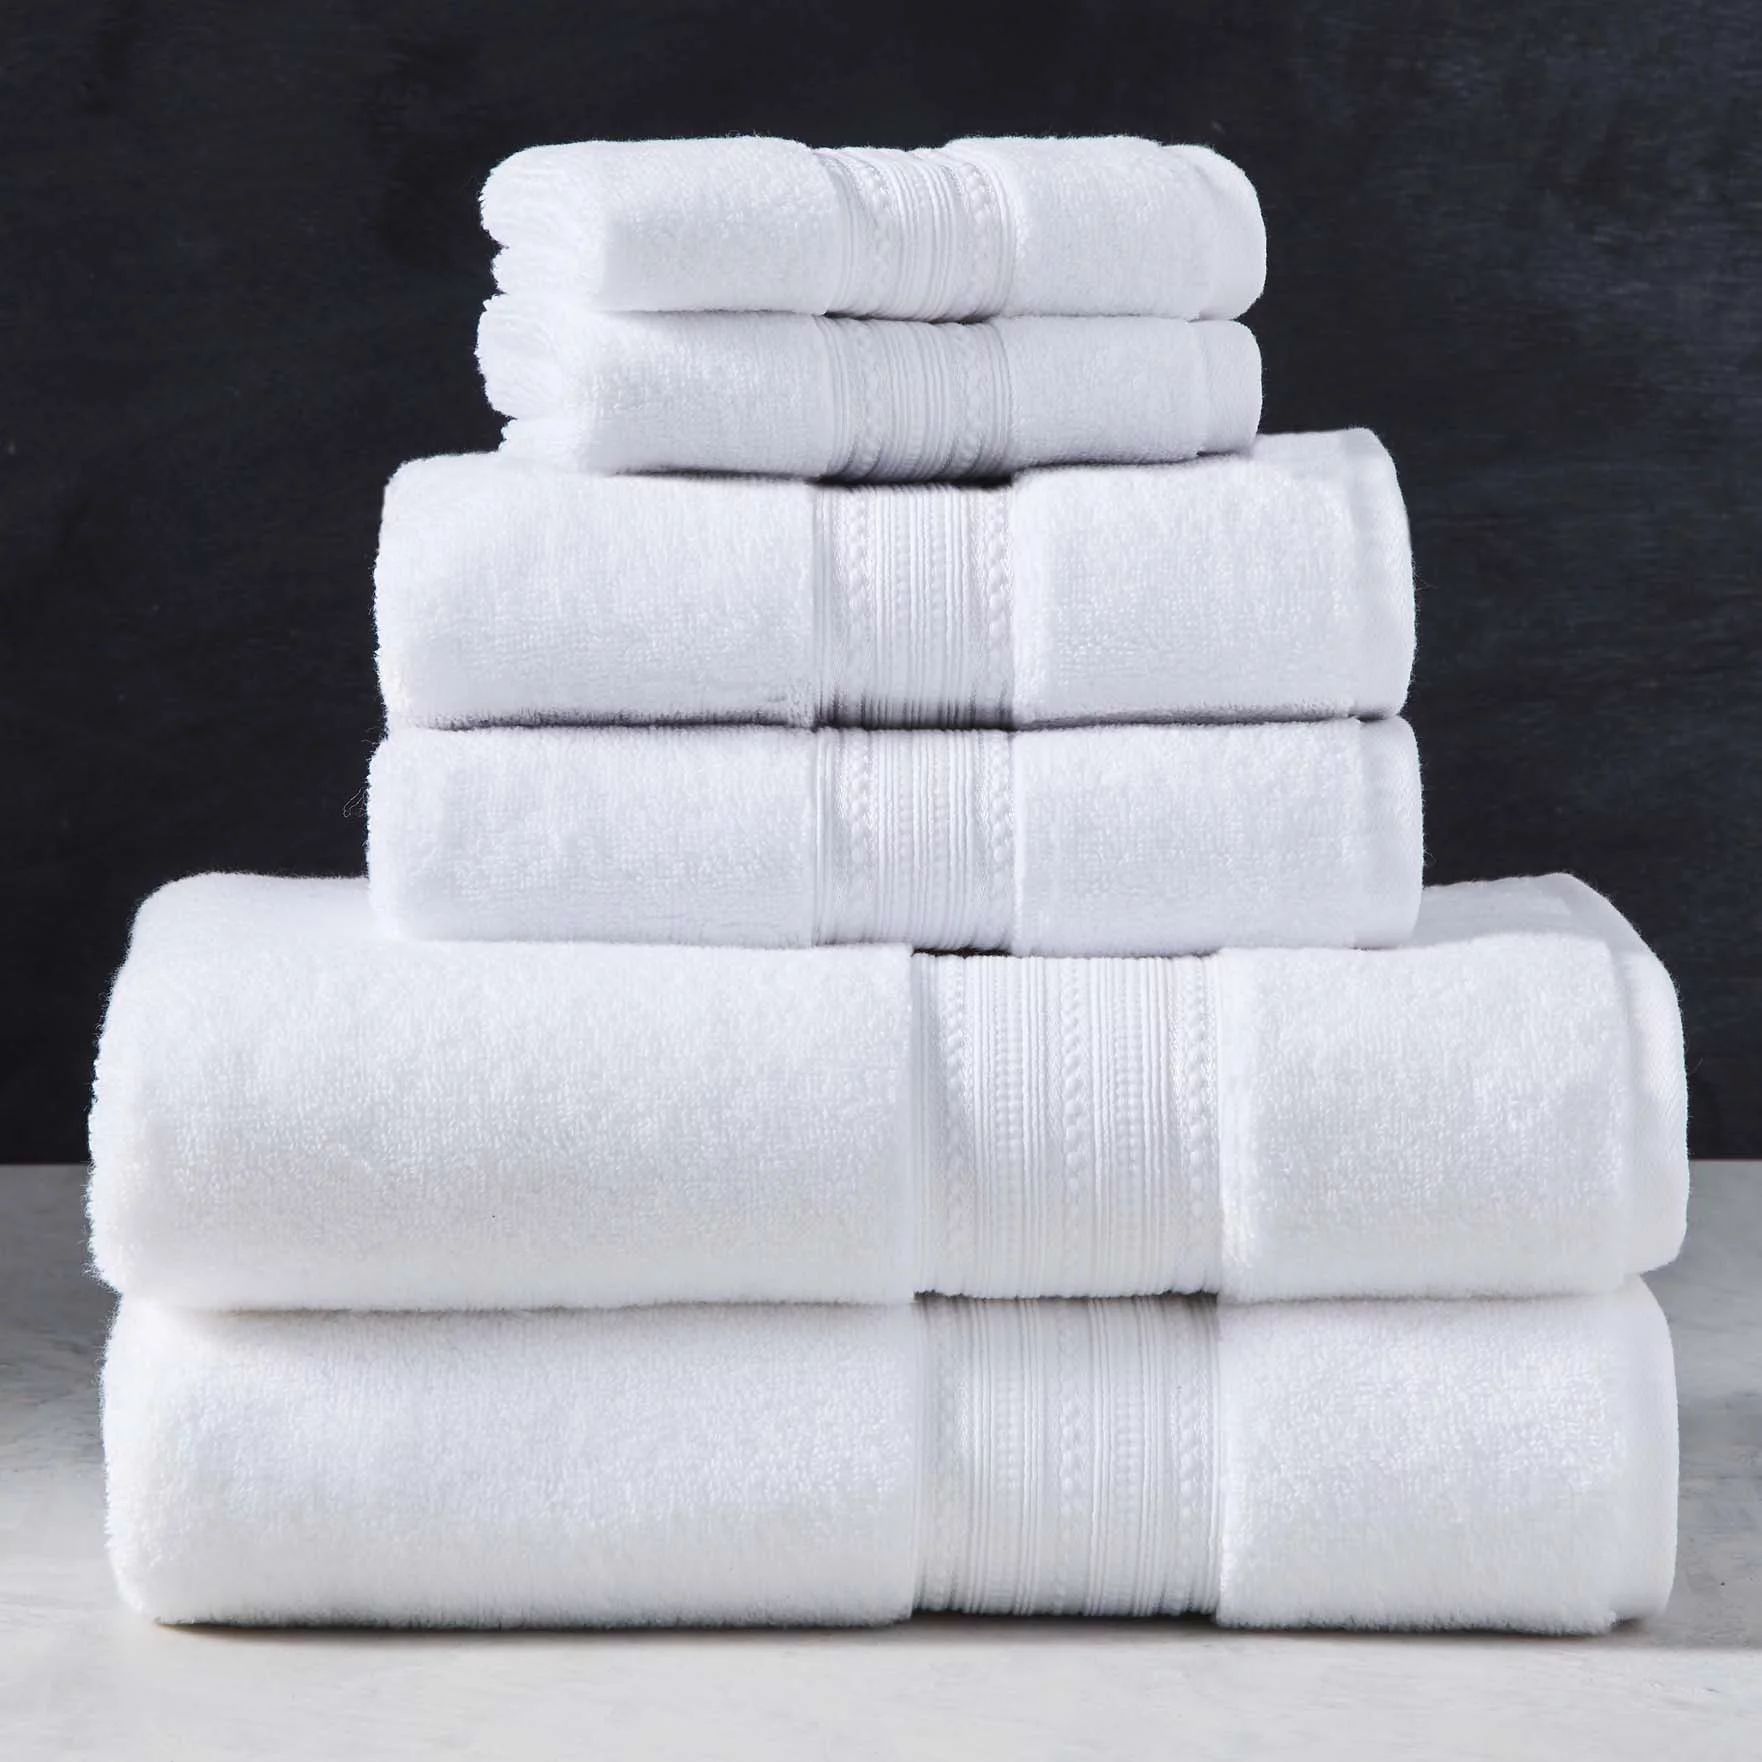 6 Piece Solid Bath Towel Set, Arctic White, Better Homes & Gardens Signature Soft Collection | Walmart (US)